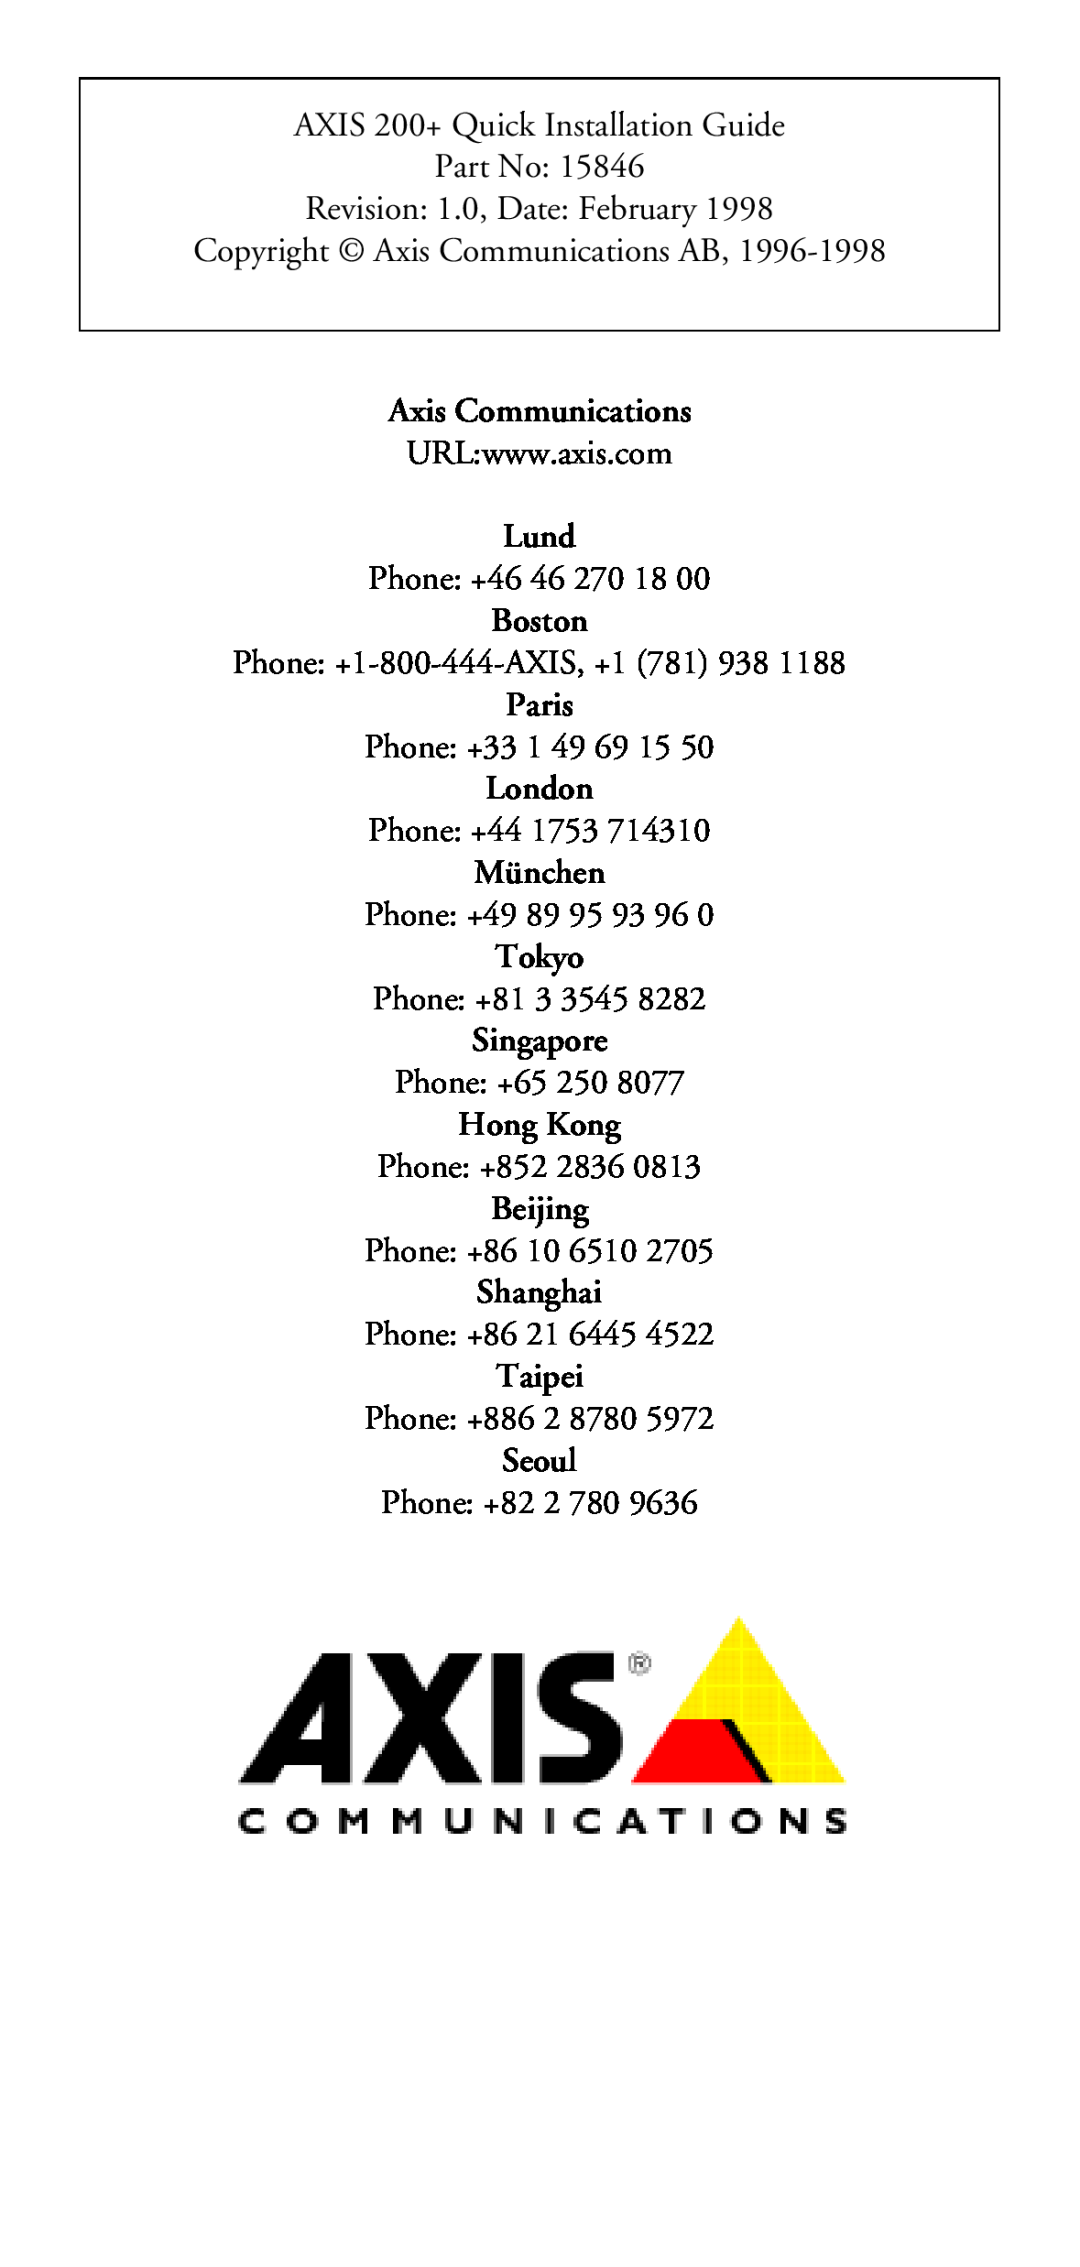 Axis Communications 200+ Axis Communications, Lund, Boston, Paris, London, München, Tokyo, Singapore, Hong Kong, Beijing 